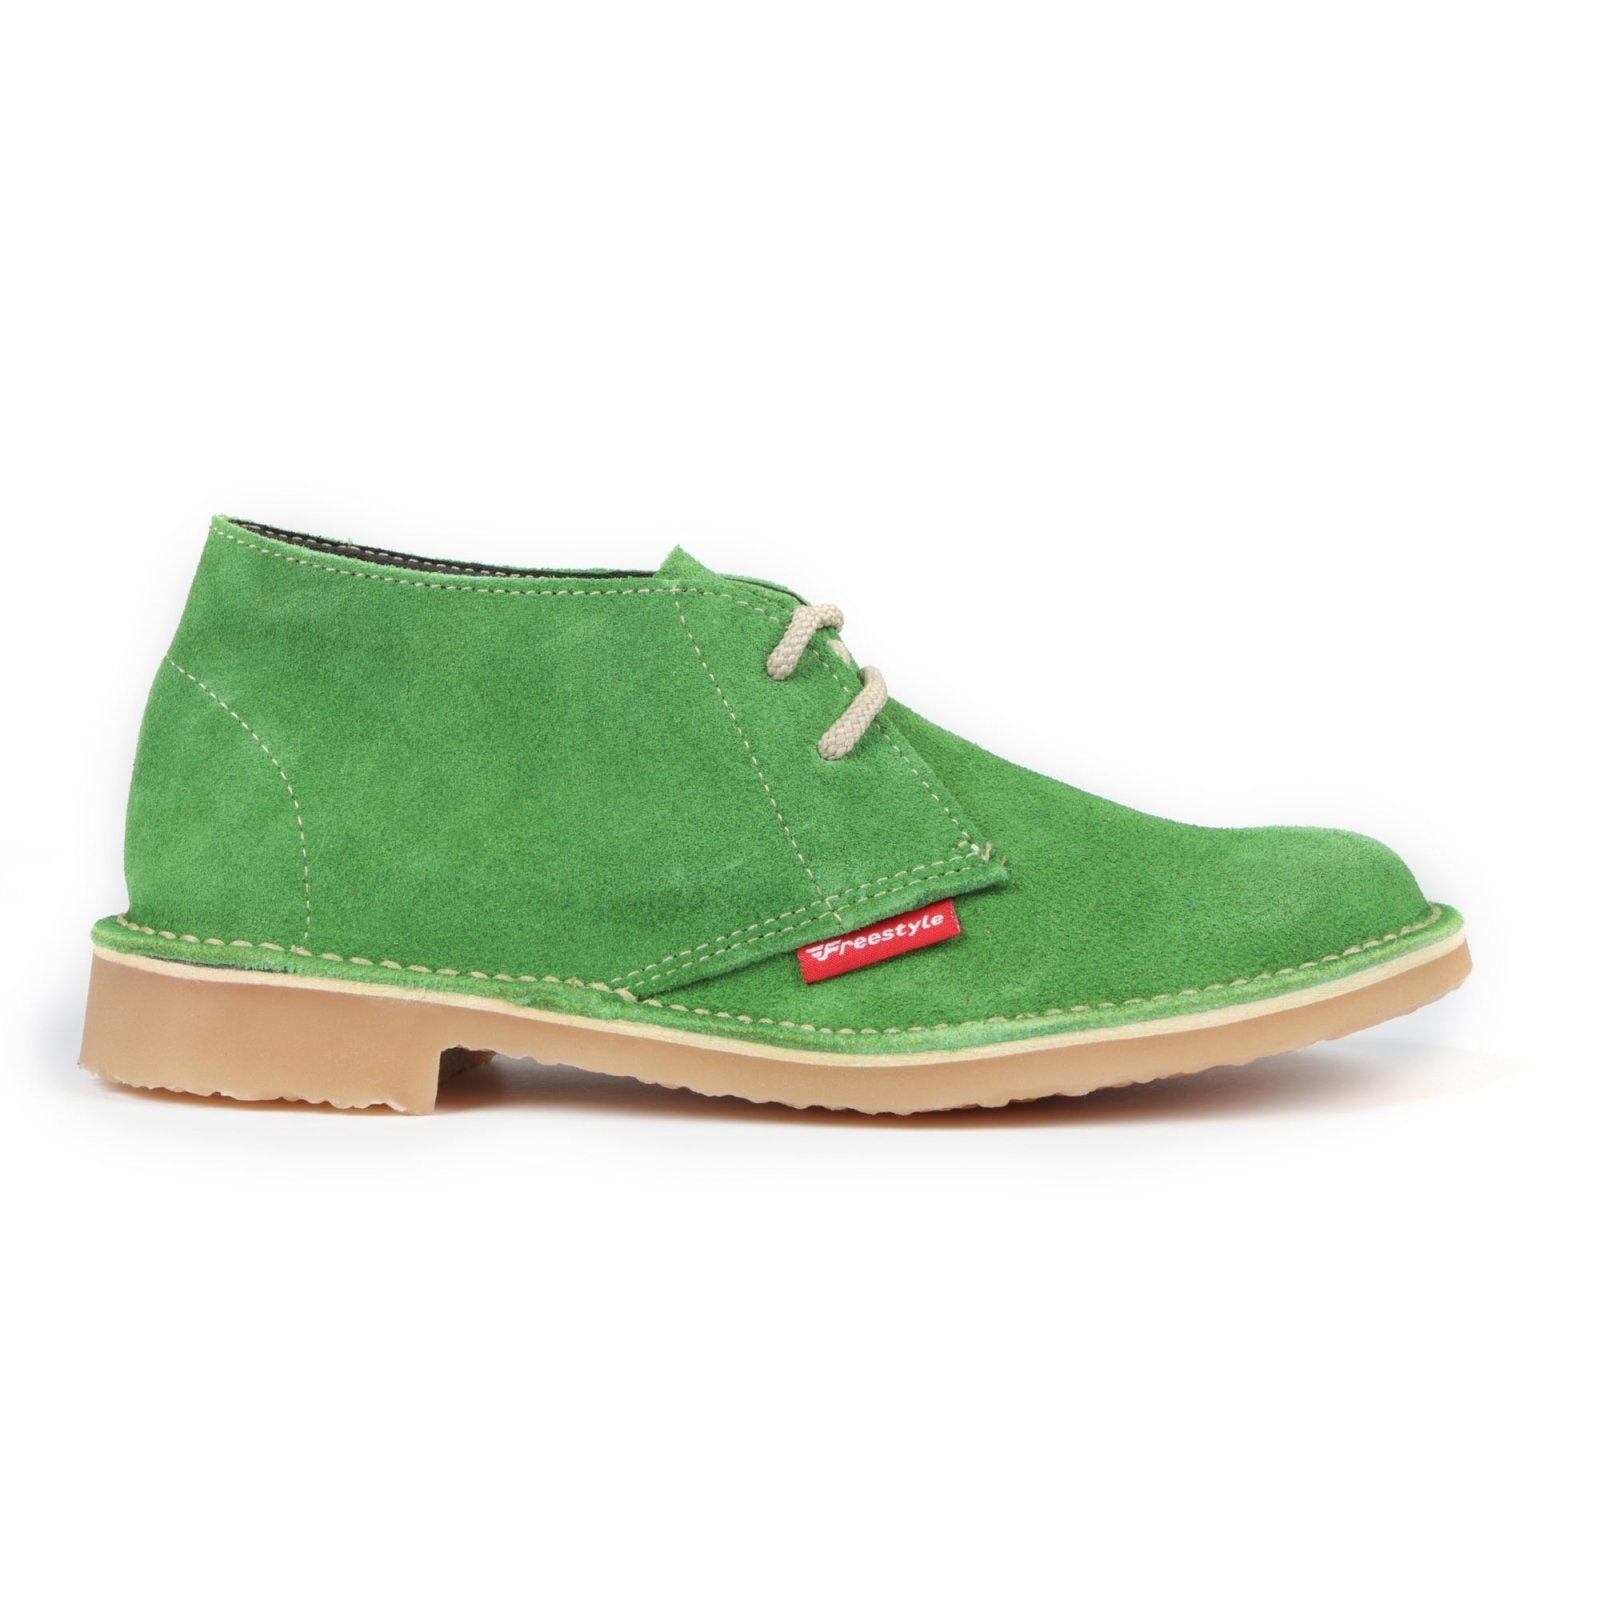 Hunter Vellie Unisex Premium Suede Veldskoen - Bright Green - Freestyle SA Proudly local leather boots veldskoens vellies leather shoes suede veldskoens